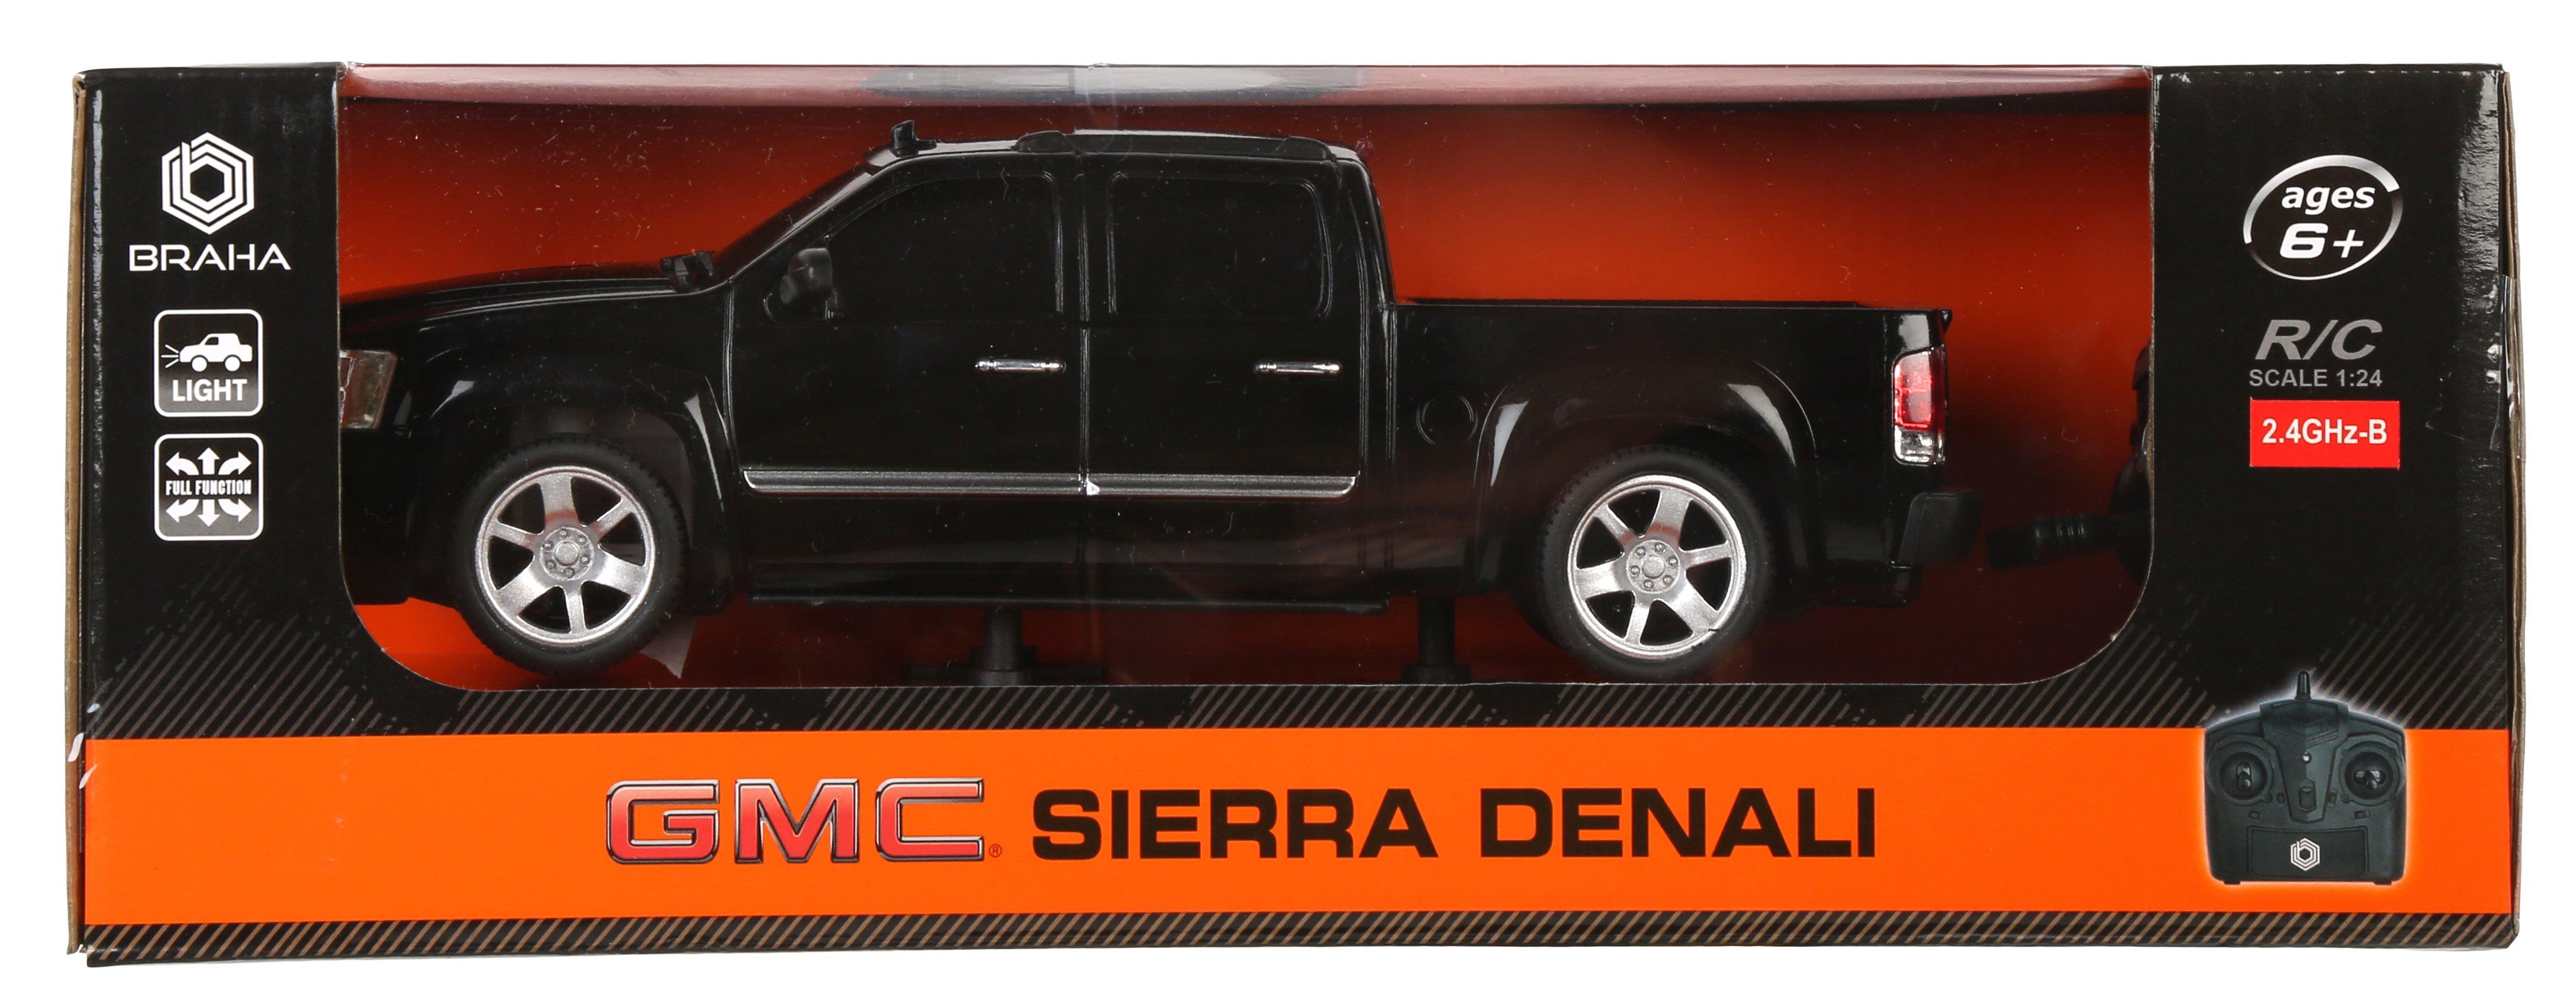 gmc truck toy